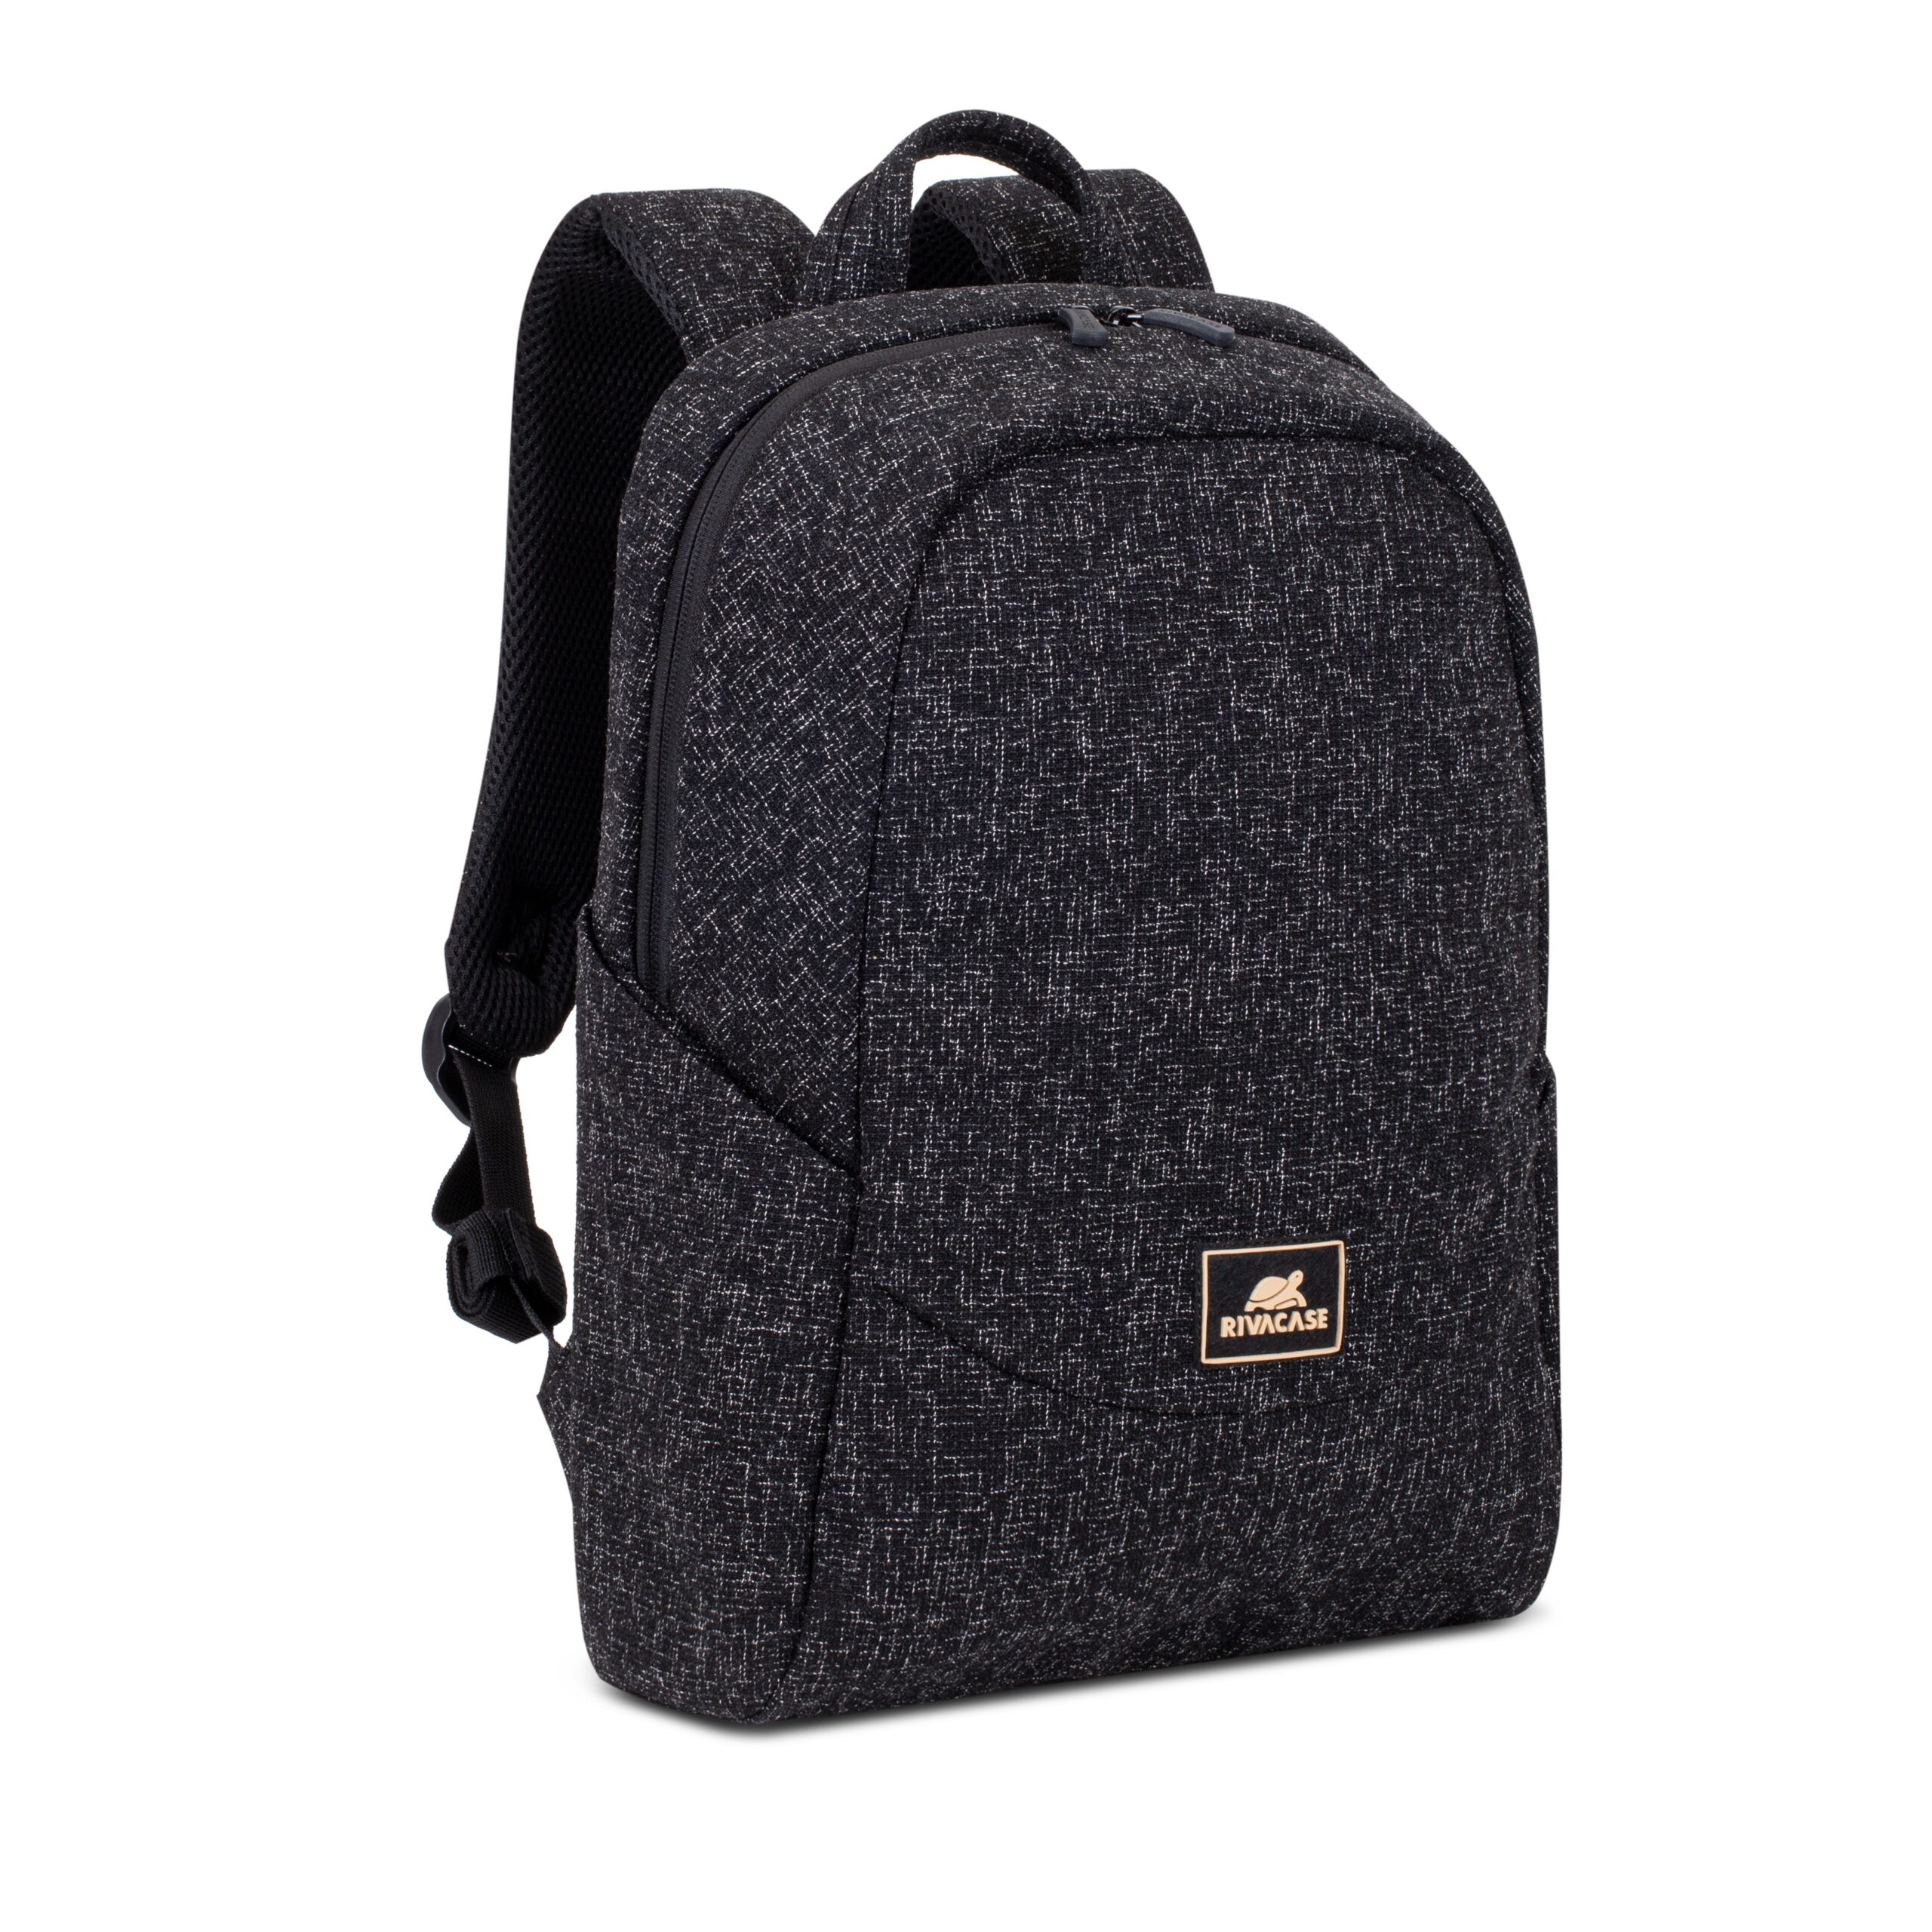 RIVACASE 7923 black Laptop backpack 13.3″ / 6